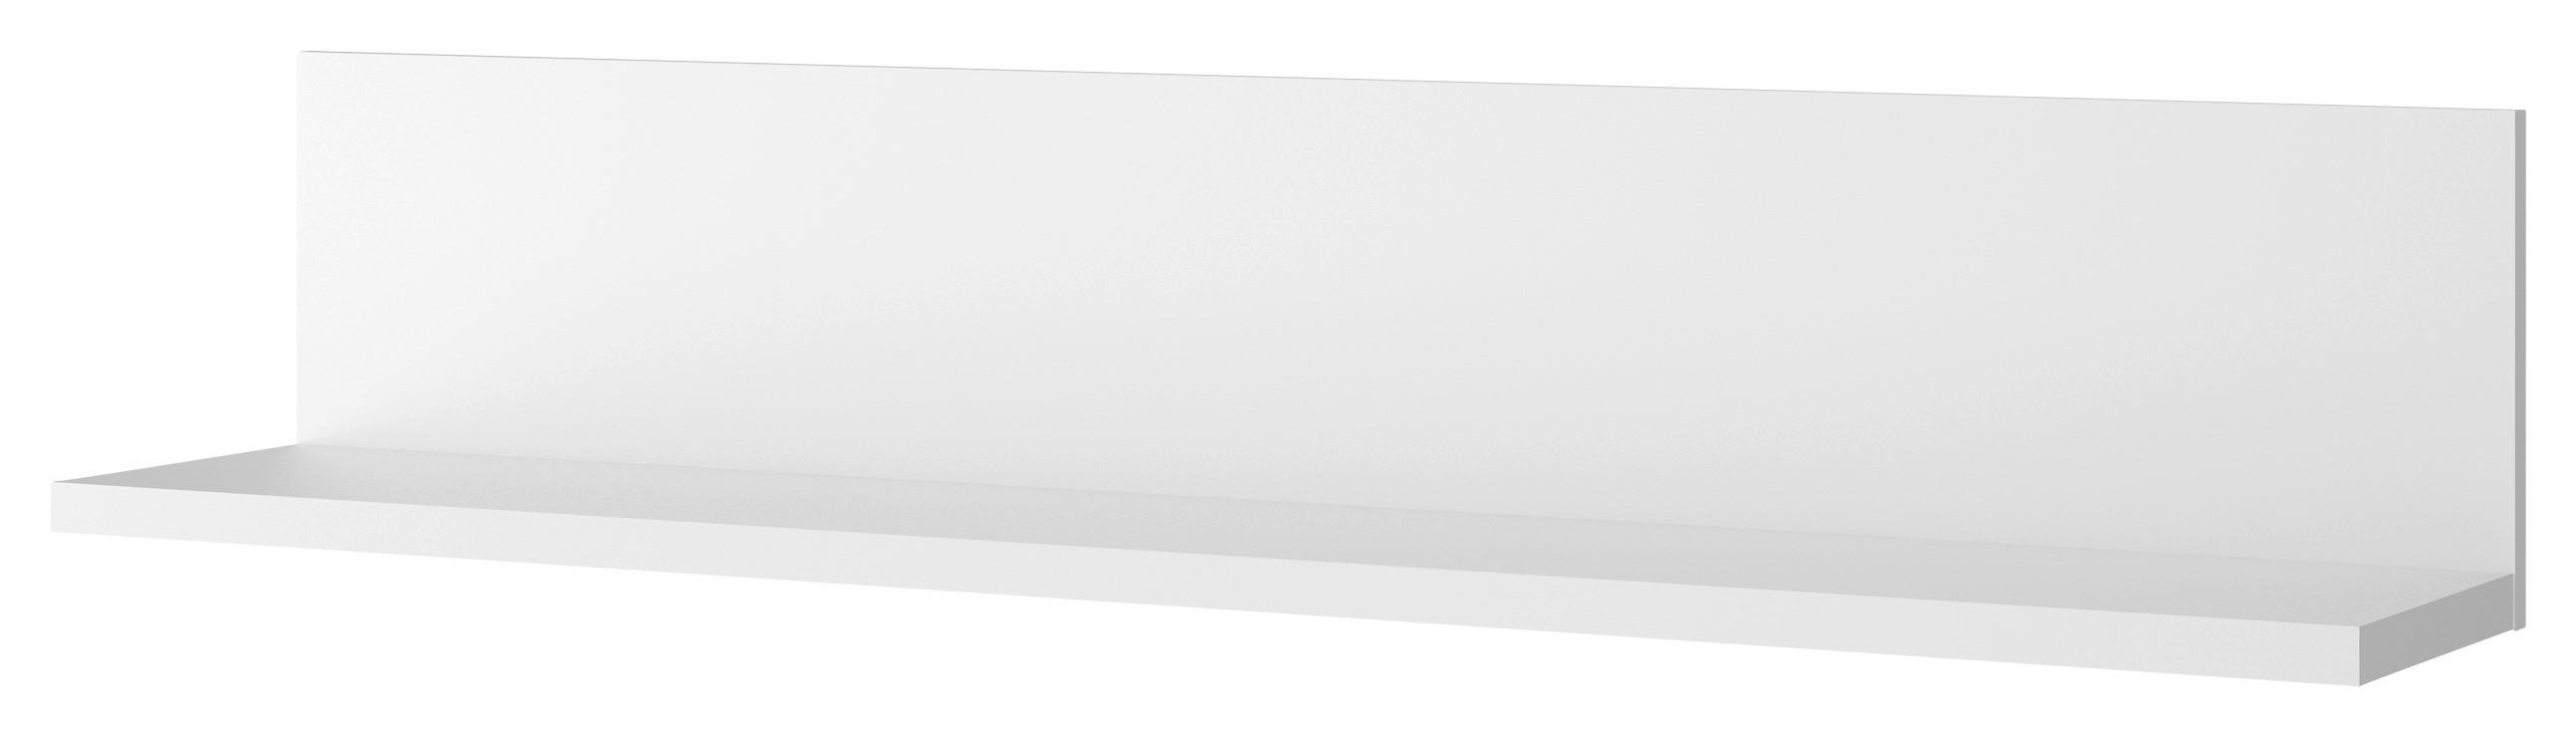 Wandboard Tomino weiß B/H/T: ca. 120x23x22 cm Tomino - weiß (120,00/23,00/22,00cm)